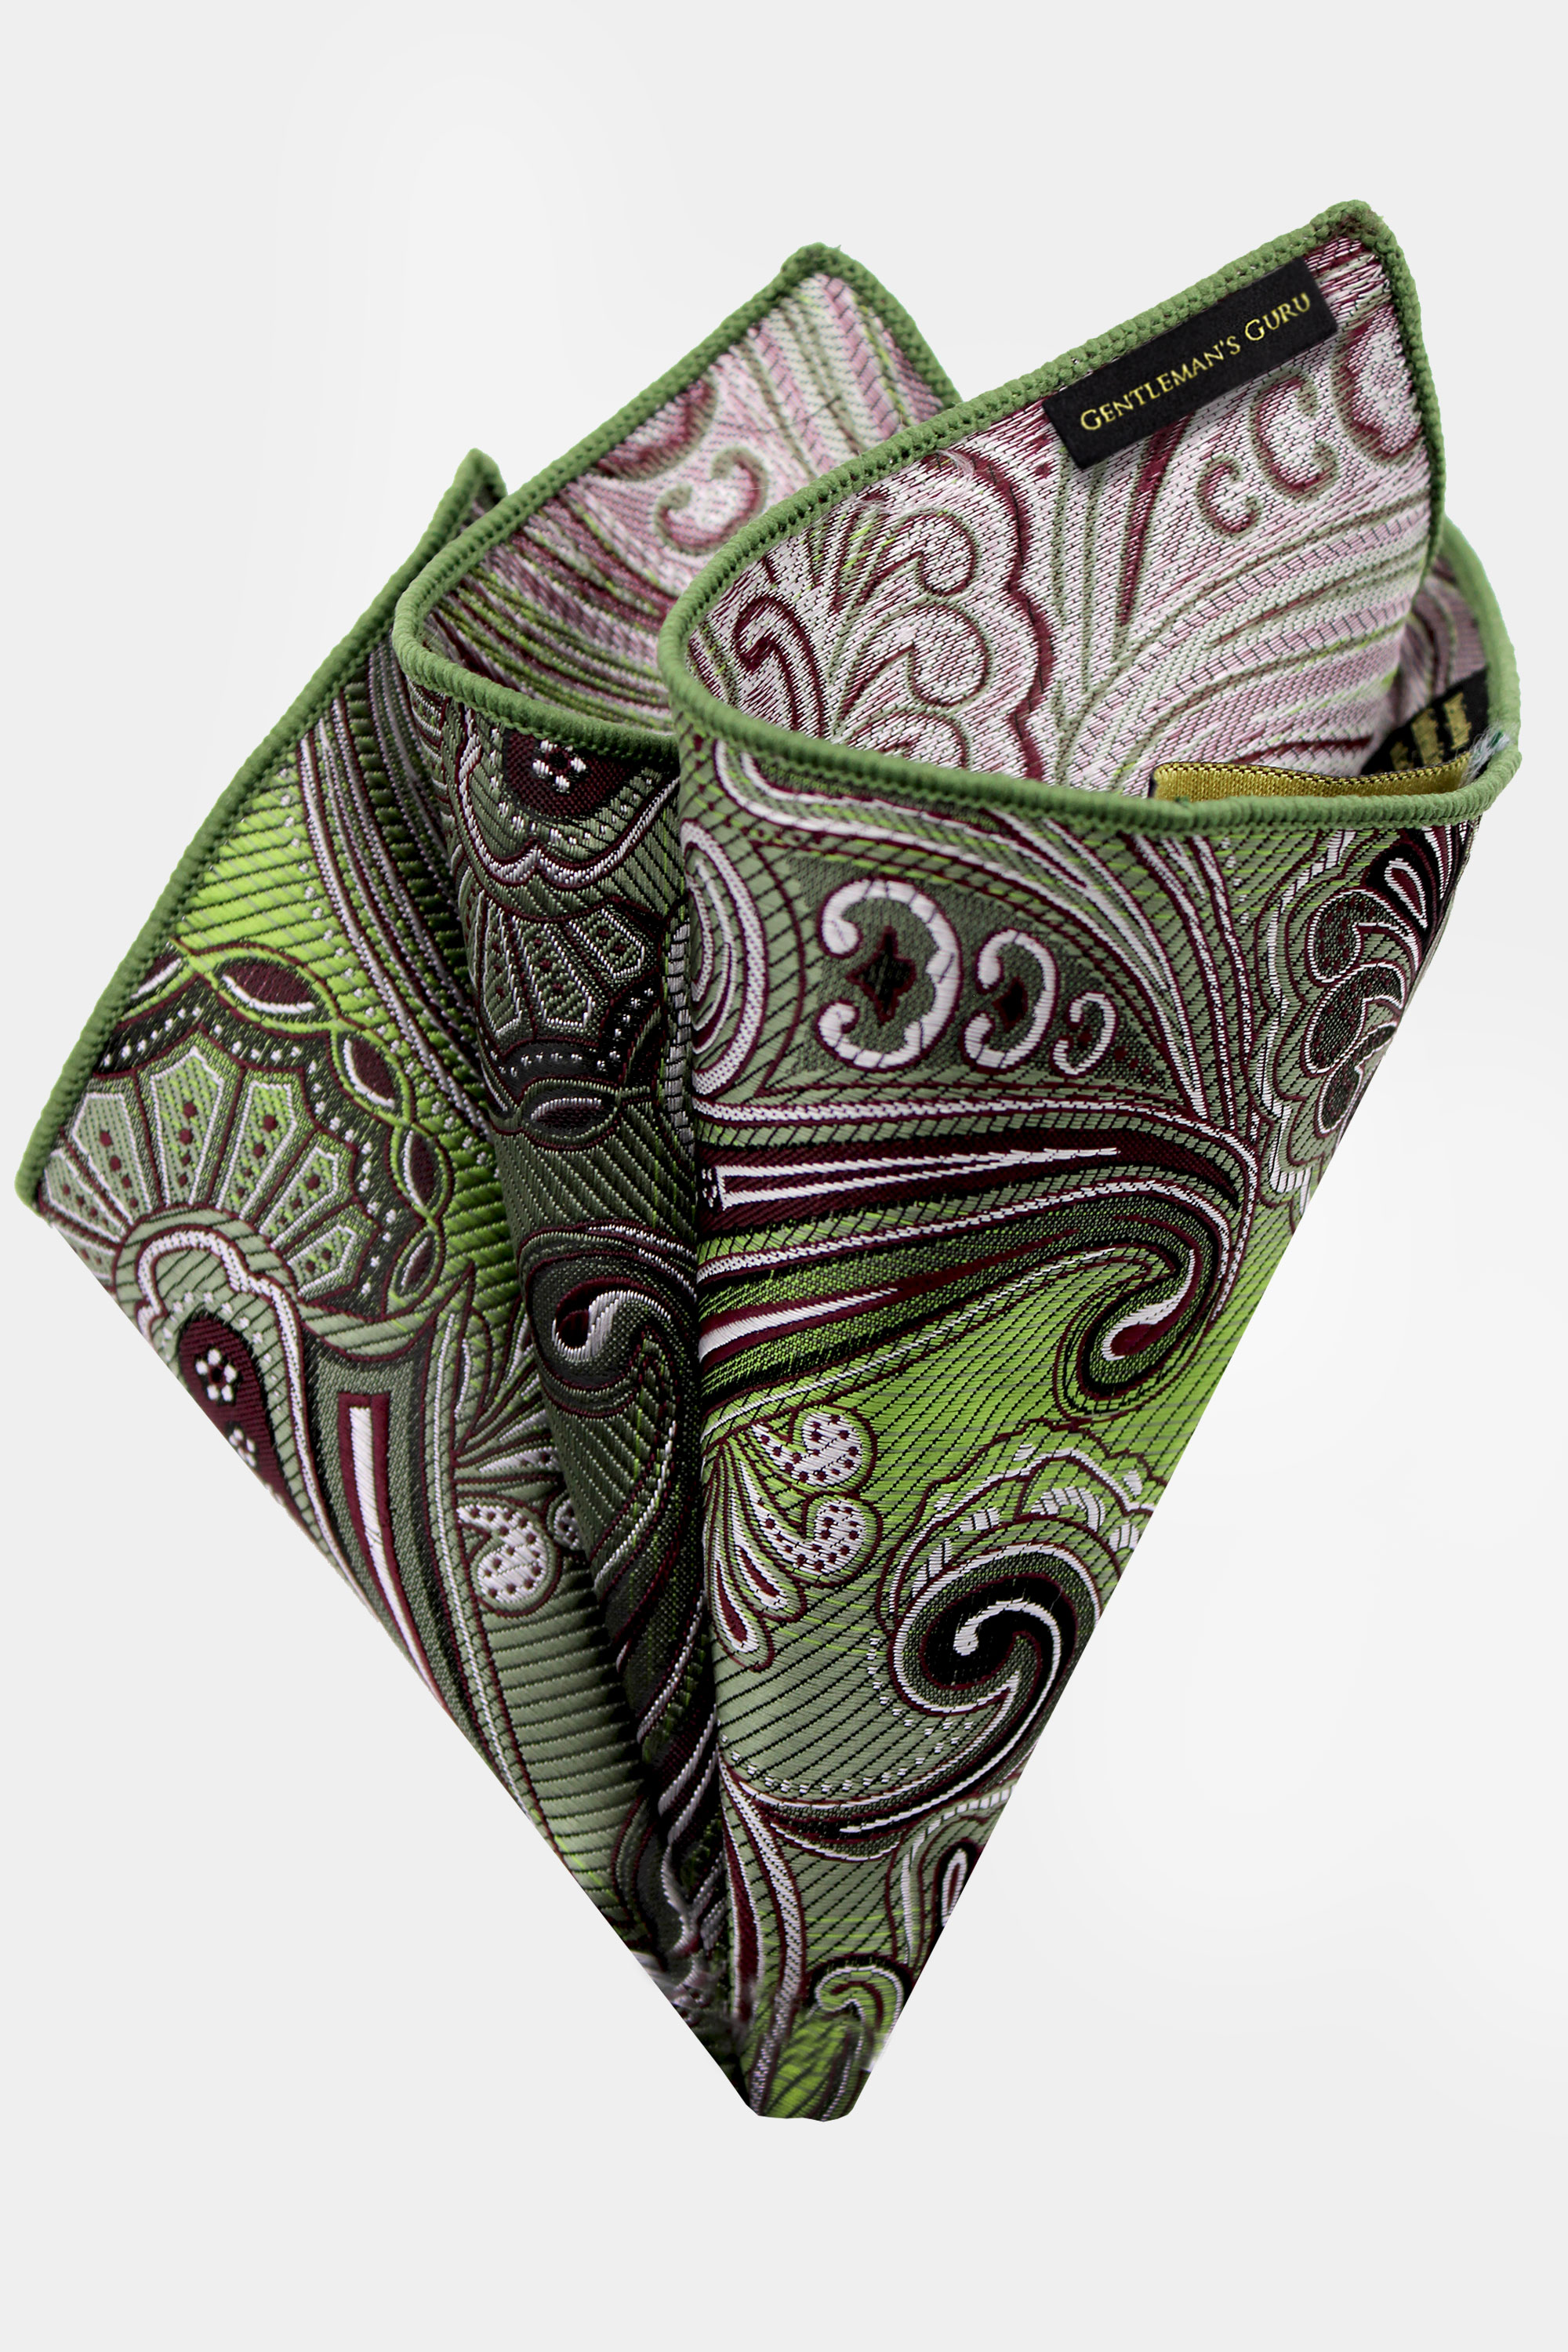 Olive-Green-Paisley-Pocket-Square-Handkerchief-from-Gentlemansguru.com